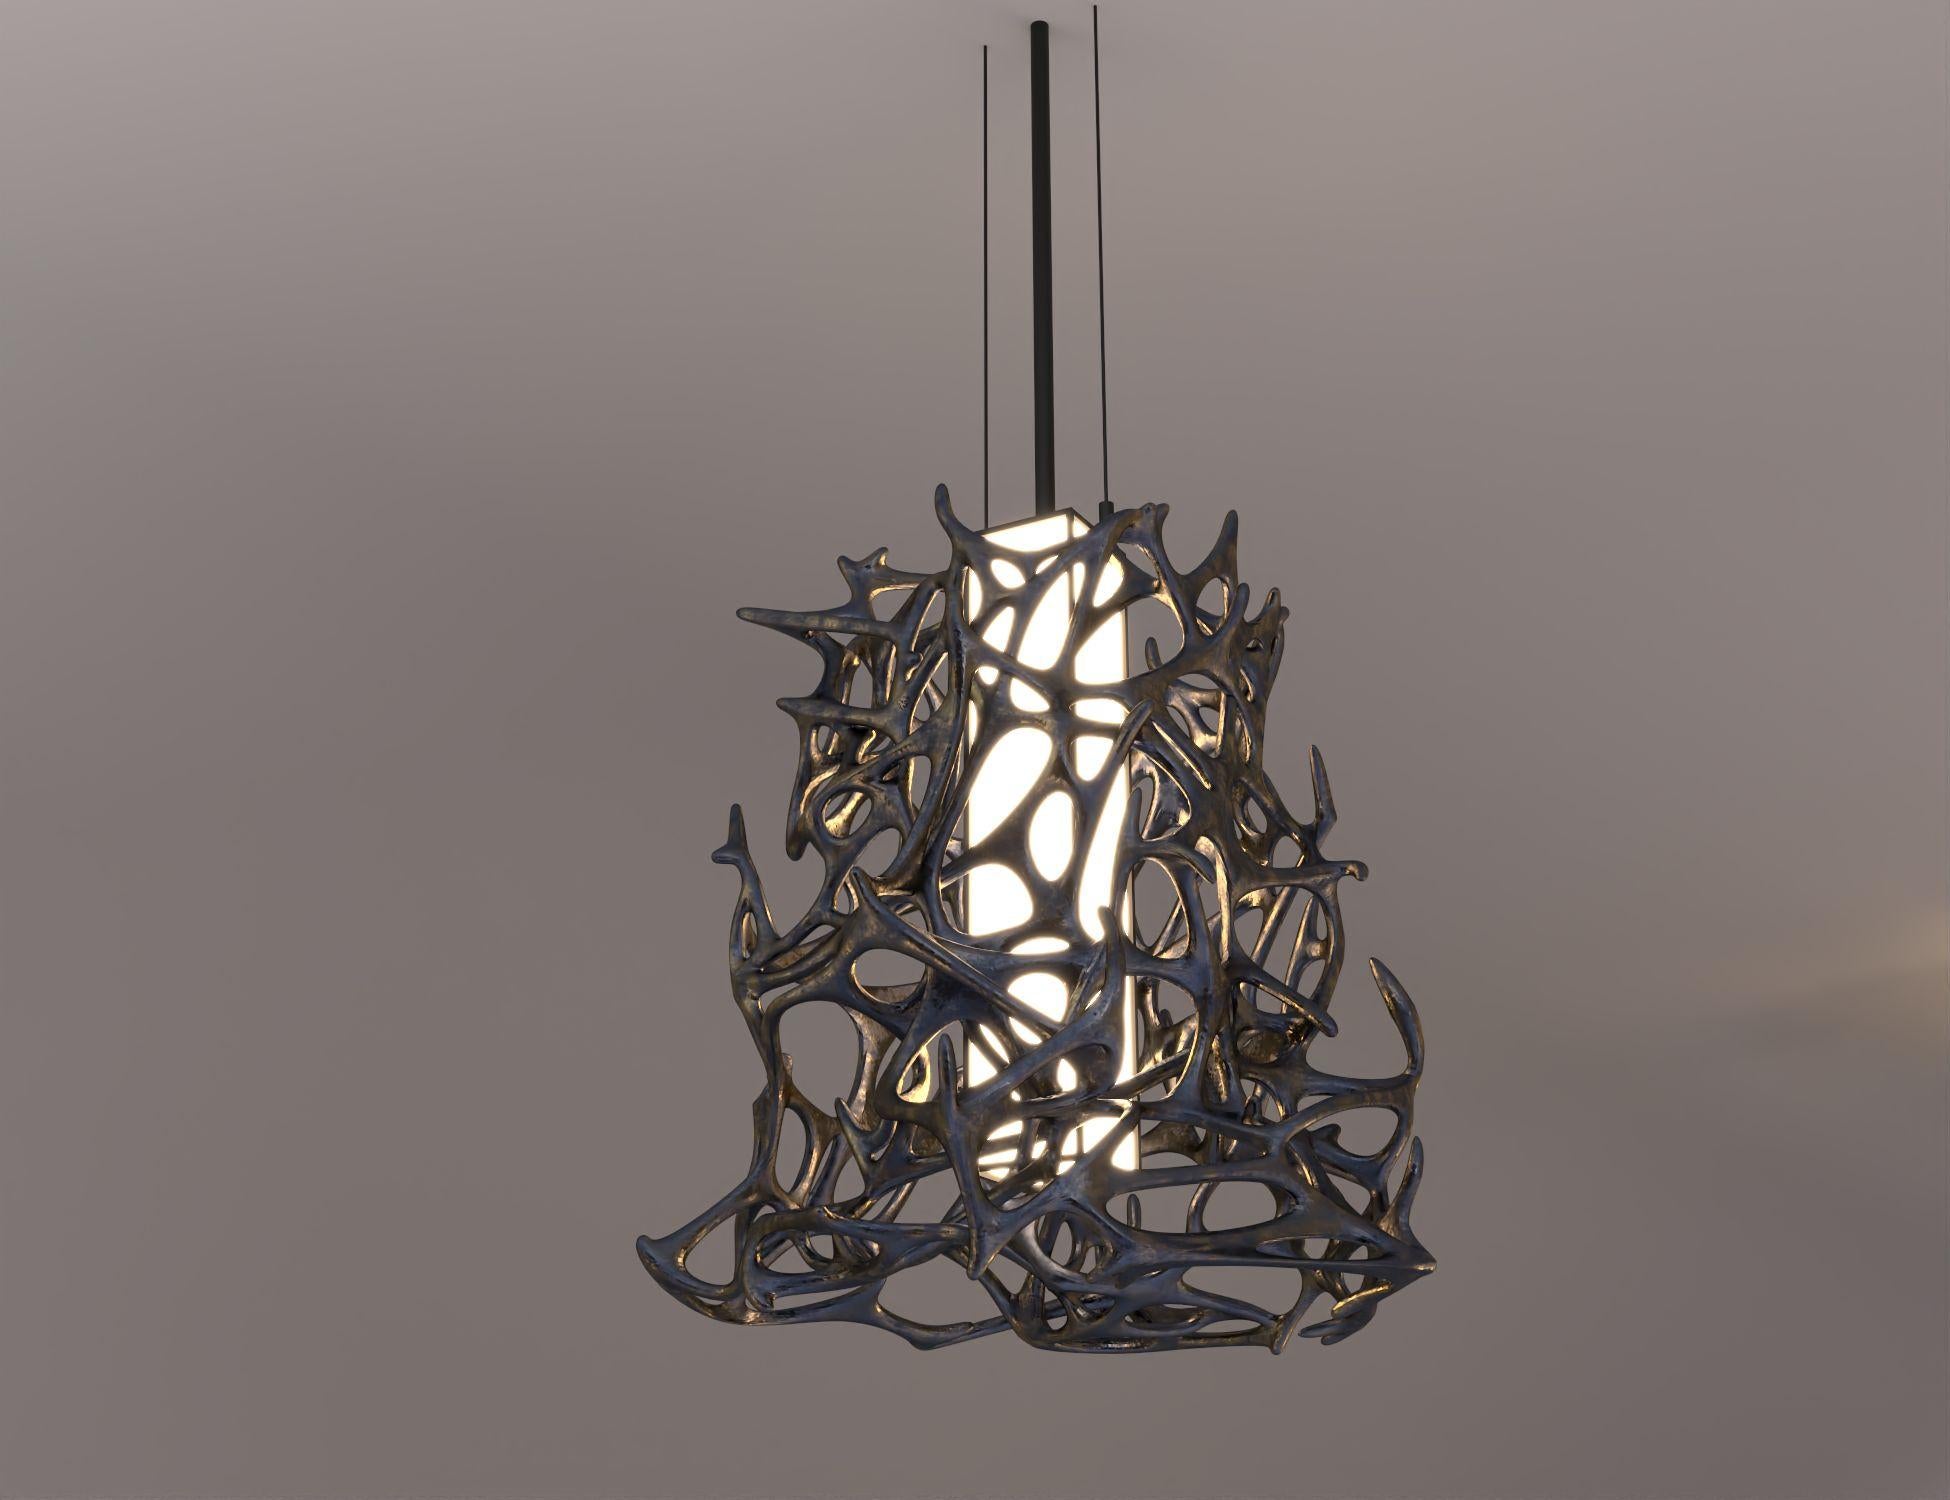 Morphogen Pendant Lamp by John Brevard
Dimensions: D 40.64 x W 40.64 x H 60.96 cm 
Materials: Bronze

Derived from the Greek word morphê (meaning 